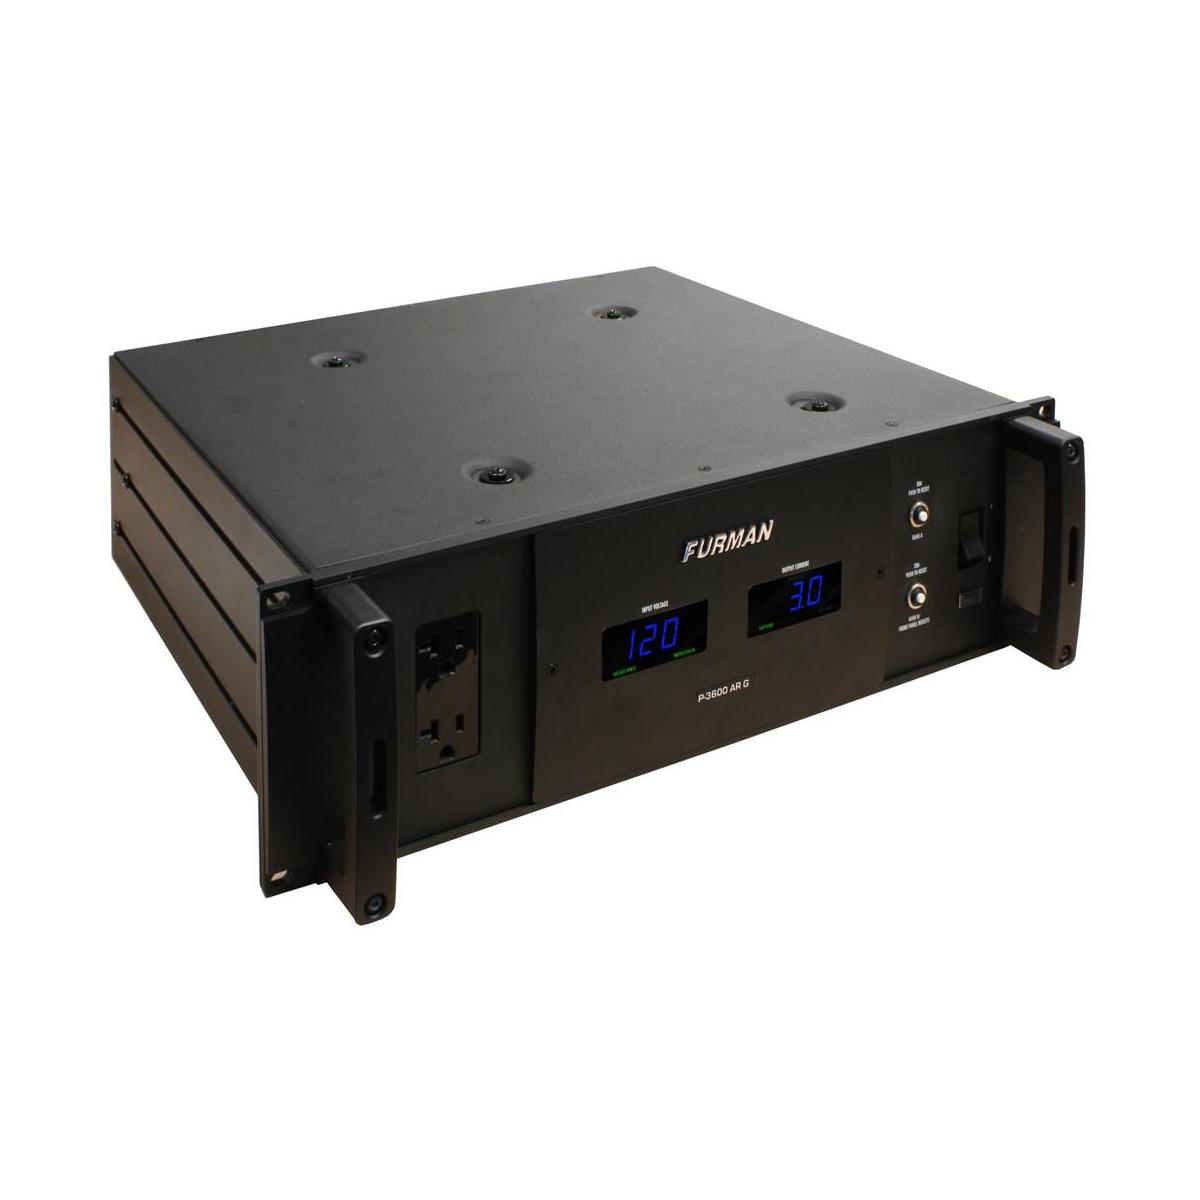 Image of Furman Sound Prestige P-3600 AR G 30A Global Voltage Regulator/Power Conditioner